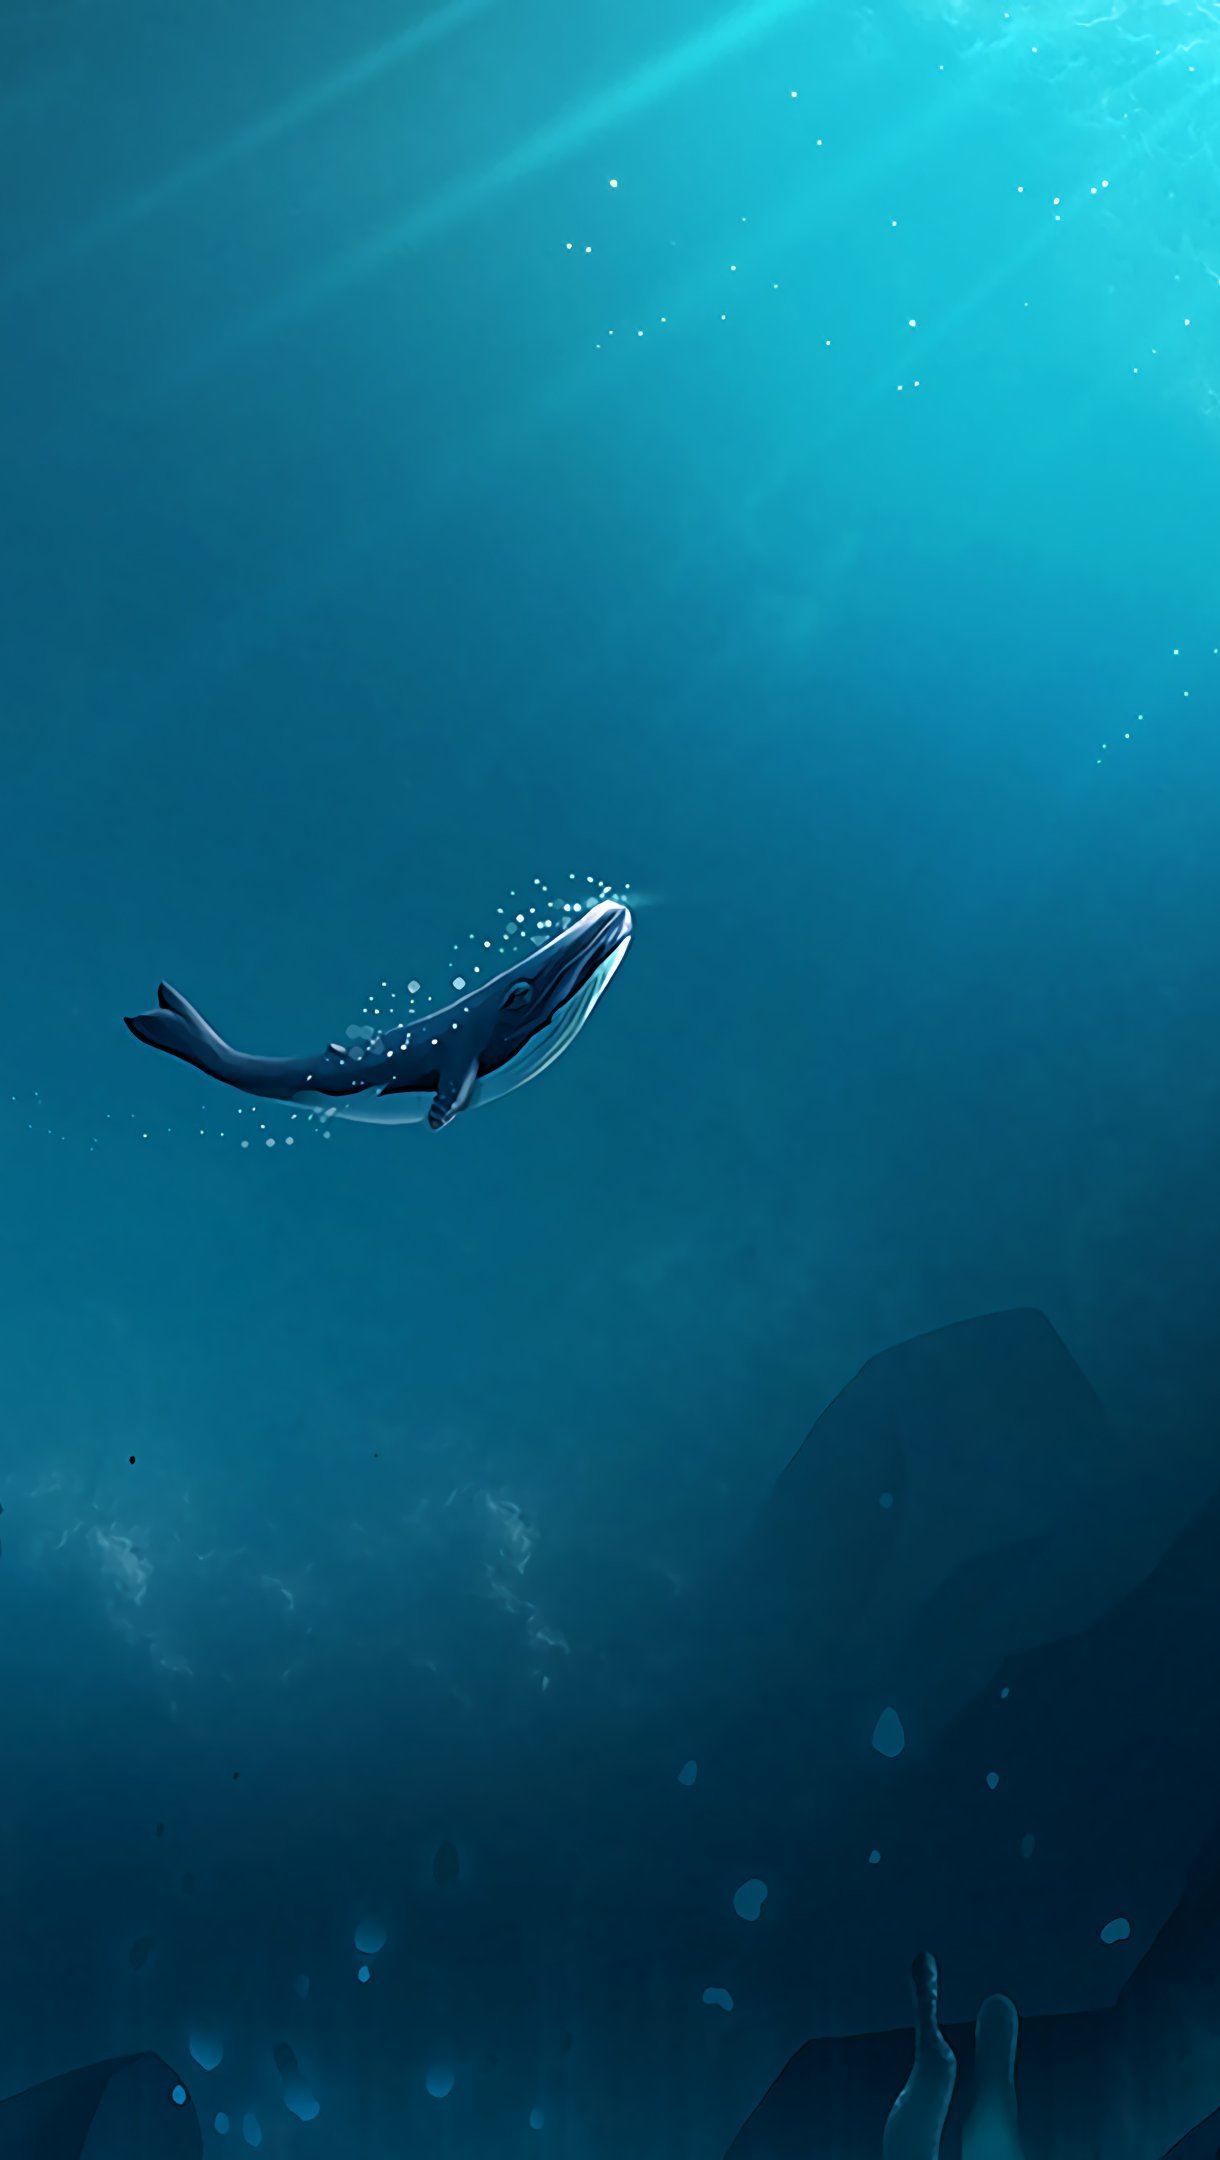 Whale in the ocean Wallpaper ID:4575